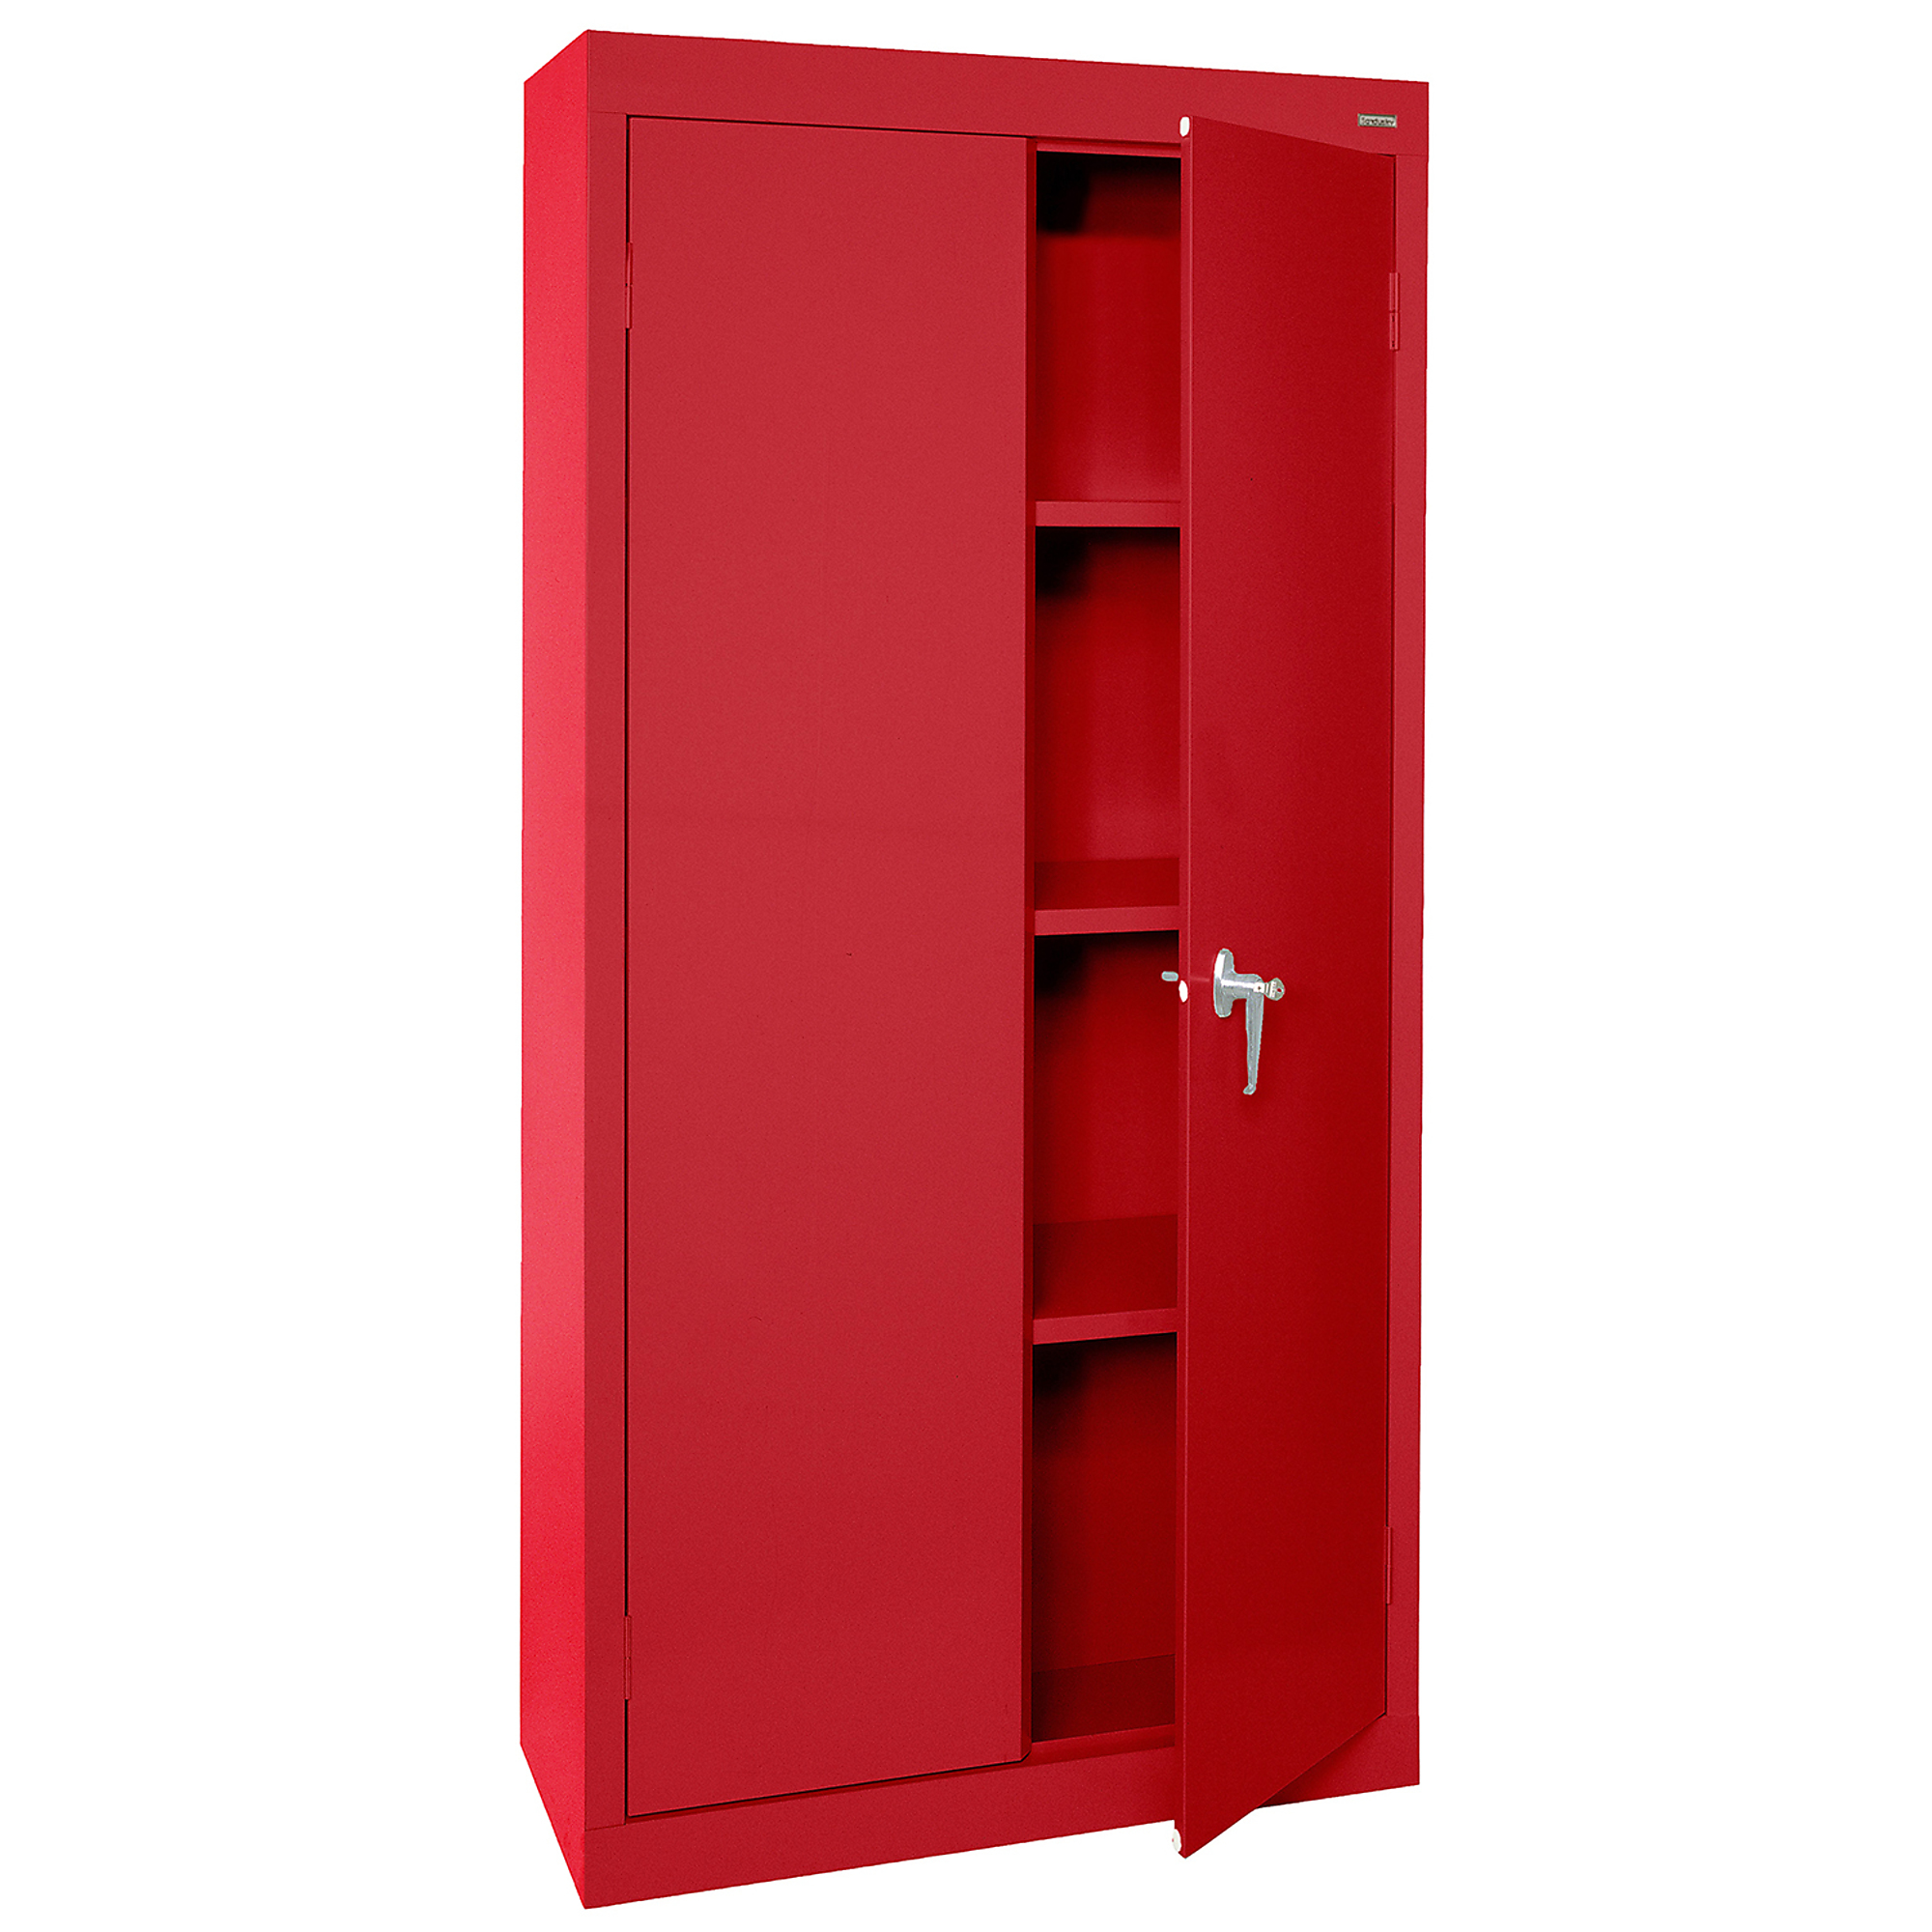 Sandusky Lee Sandusky, Value Line Cabinet 30x18x72 Red, Height 72 in, Width 30 in, Color Red, Model VF31301872-01